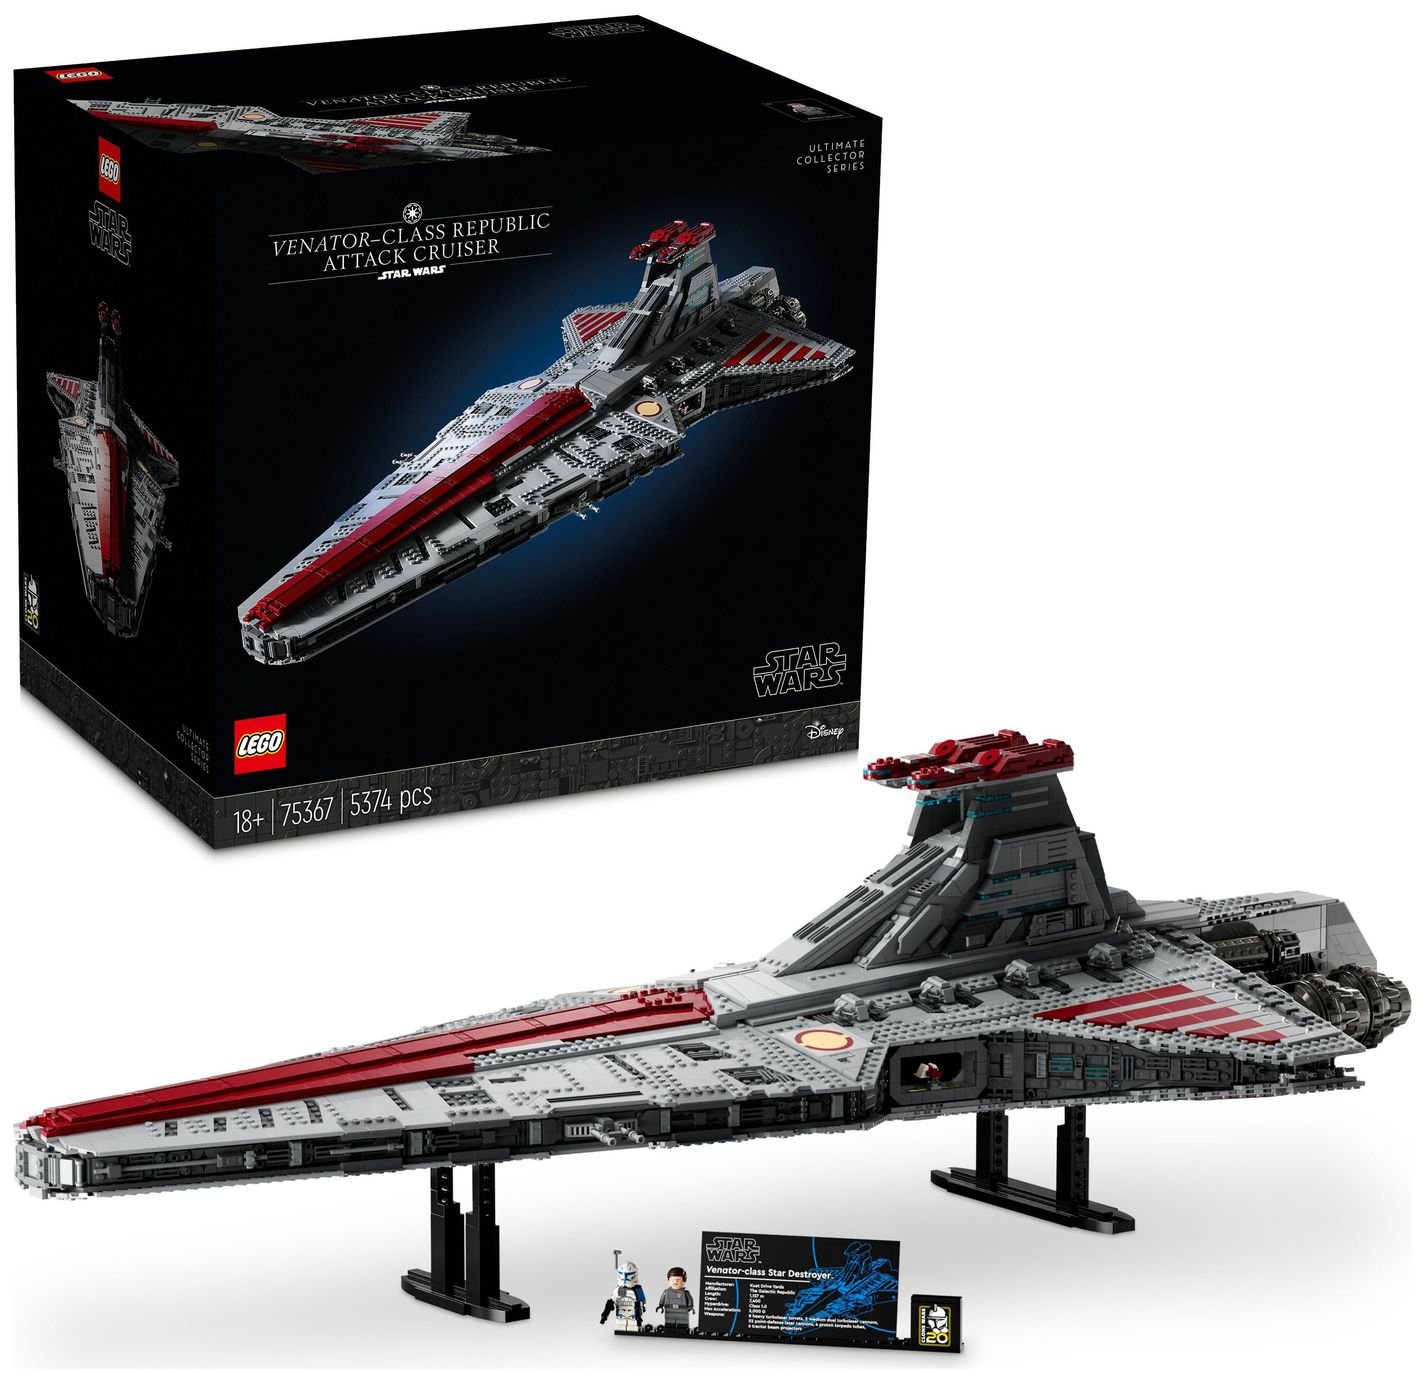 LEGO Star Wars Venator-Class Republic Attack Cruiser 75367